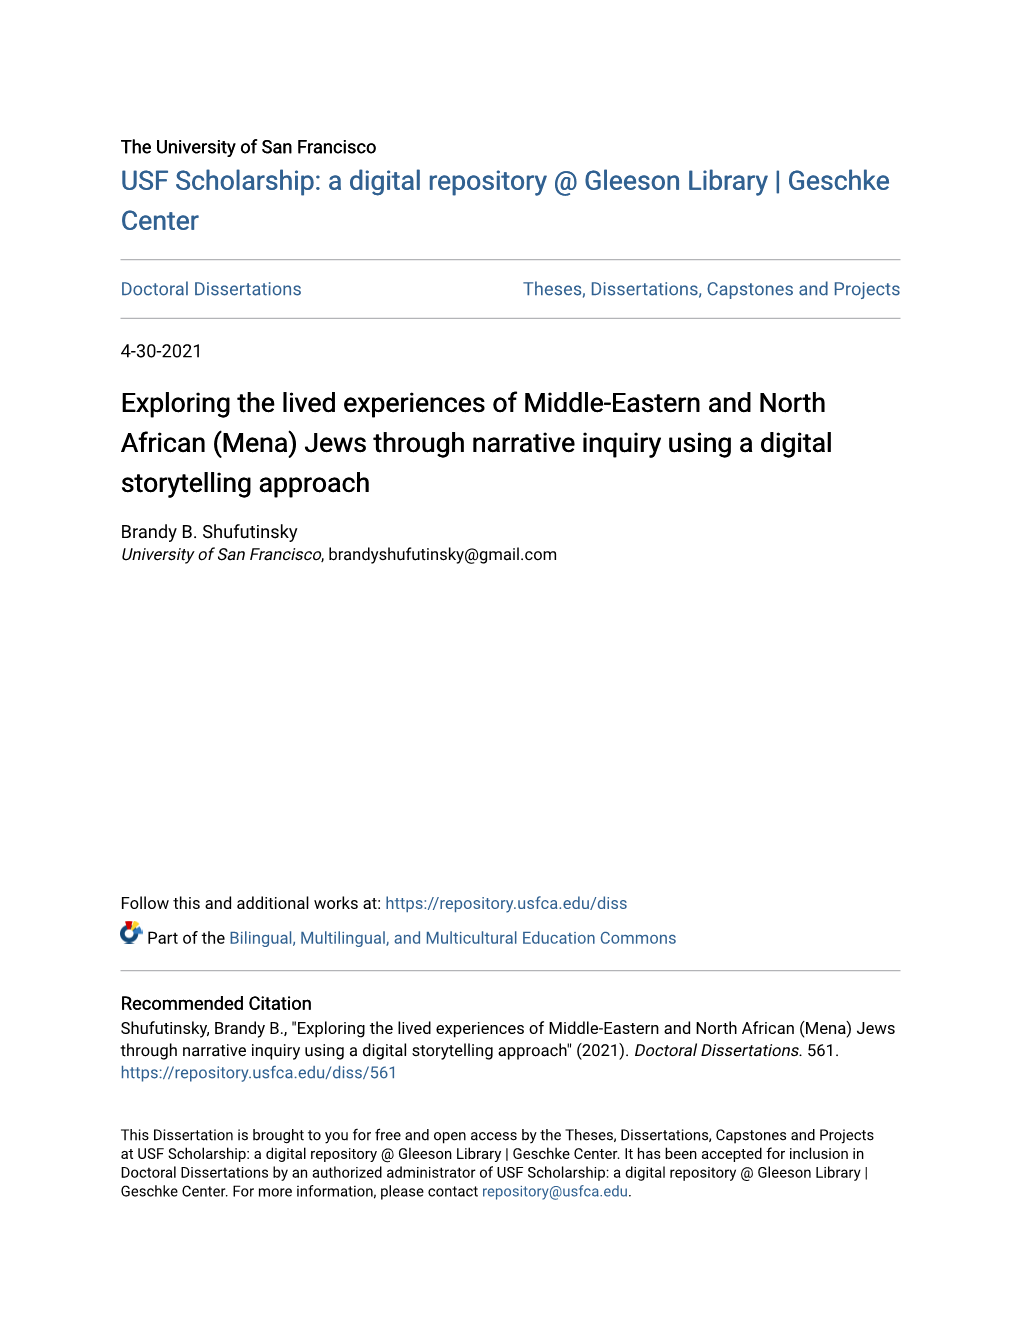 (Mena) Jews Through Narrative Inquiry Using a Digital Storytelling Approach